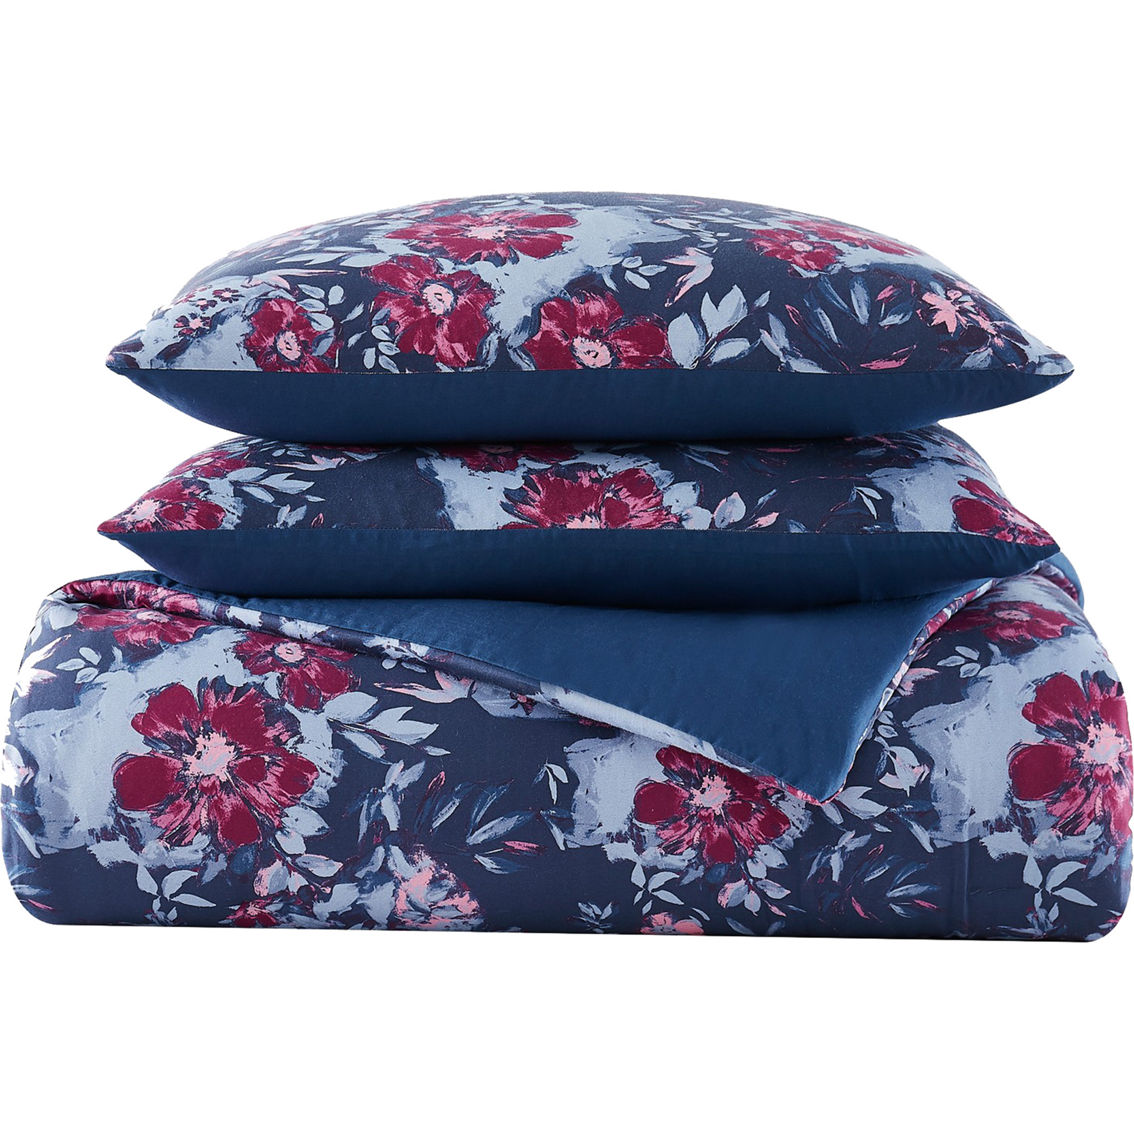 Badgley Mischka Home Midnight Garden Comforter Set | Bedding Sets ...